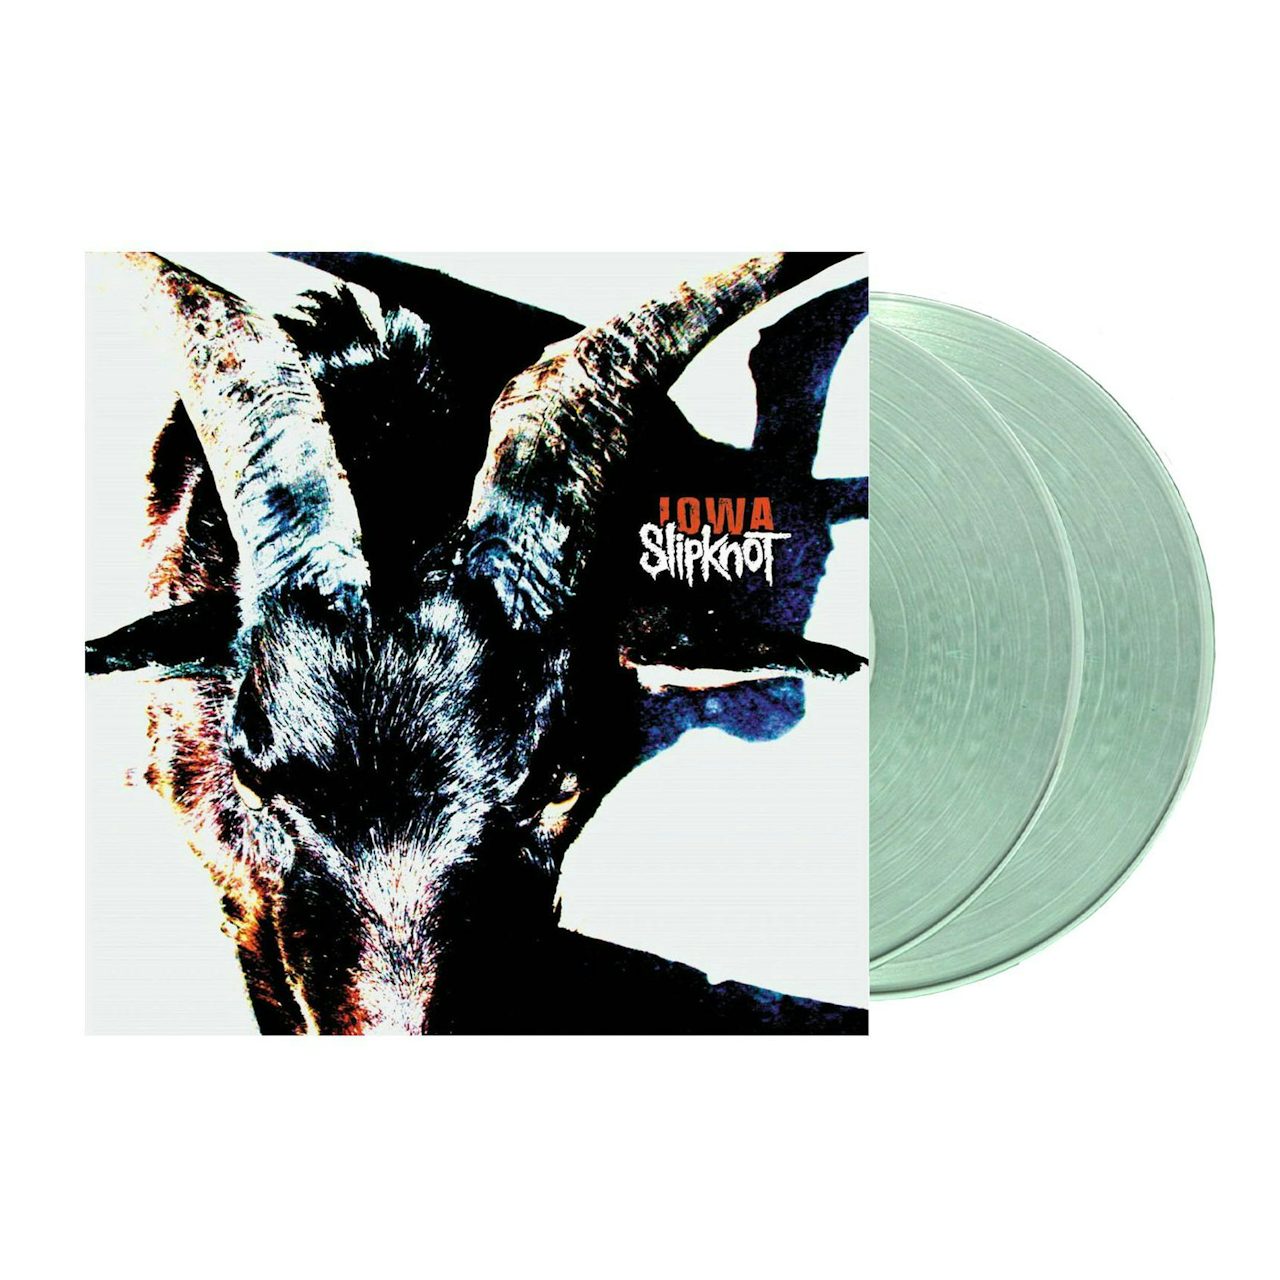 Slipknot - lowa (Limited Edition on Double Translucent Green Vinyl)